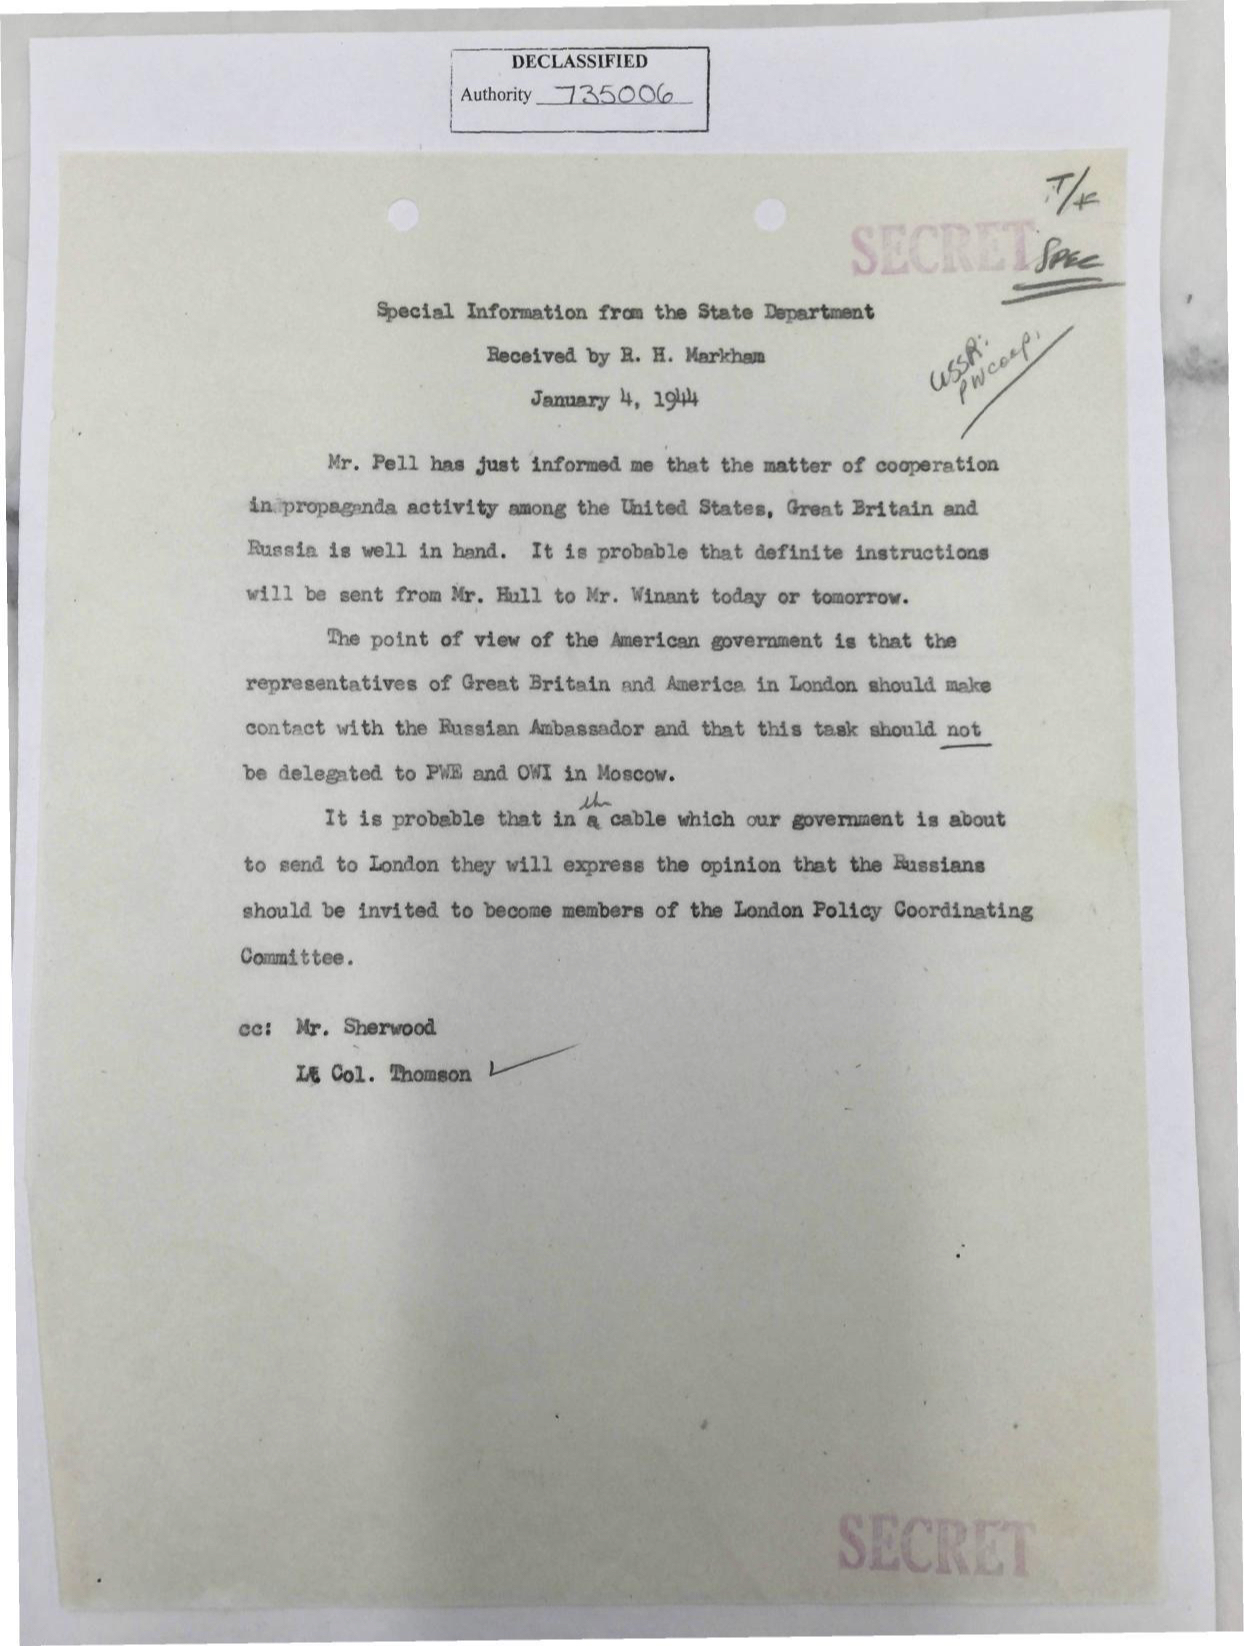 owi-propaganda-coordination-r-h-markham-robert-e-sherwood-january-4-1944